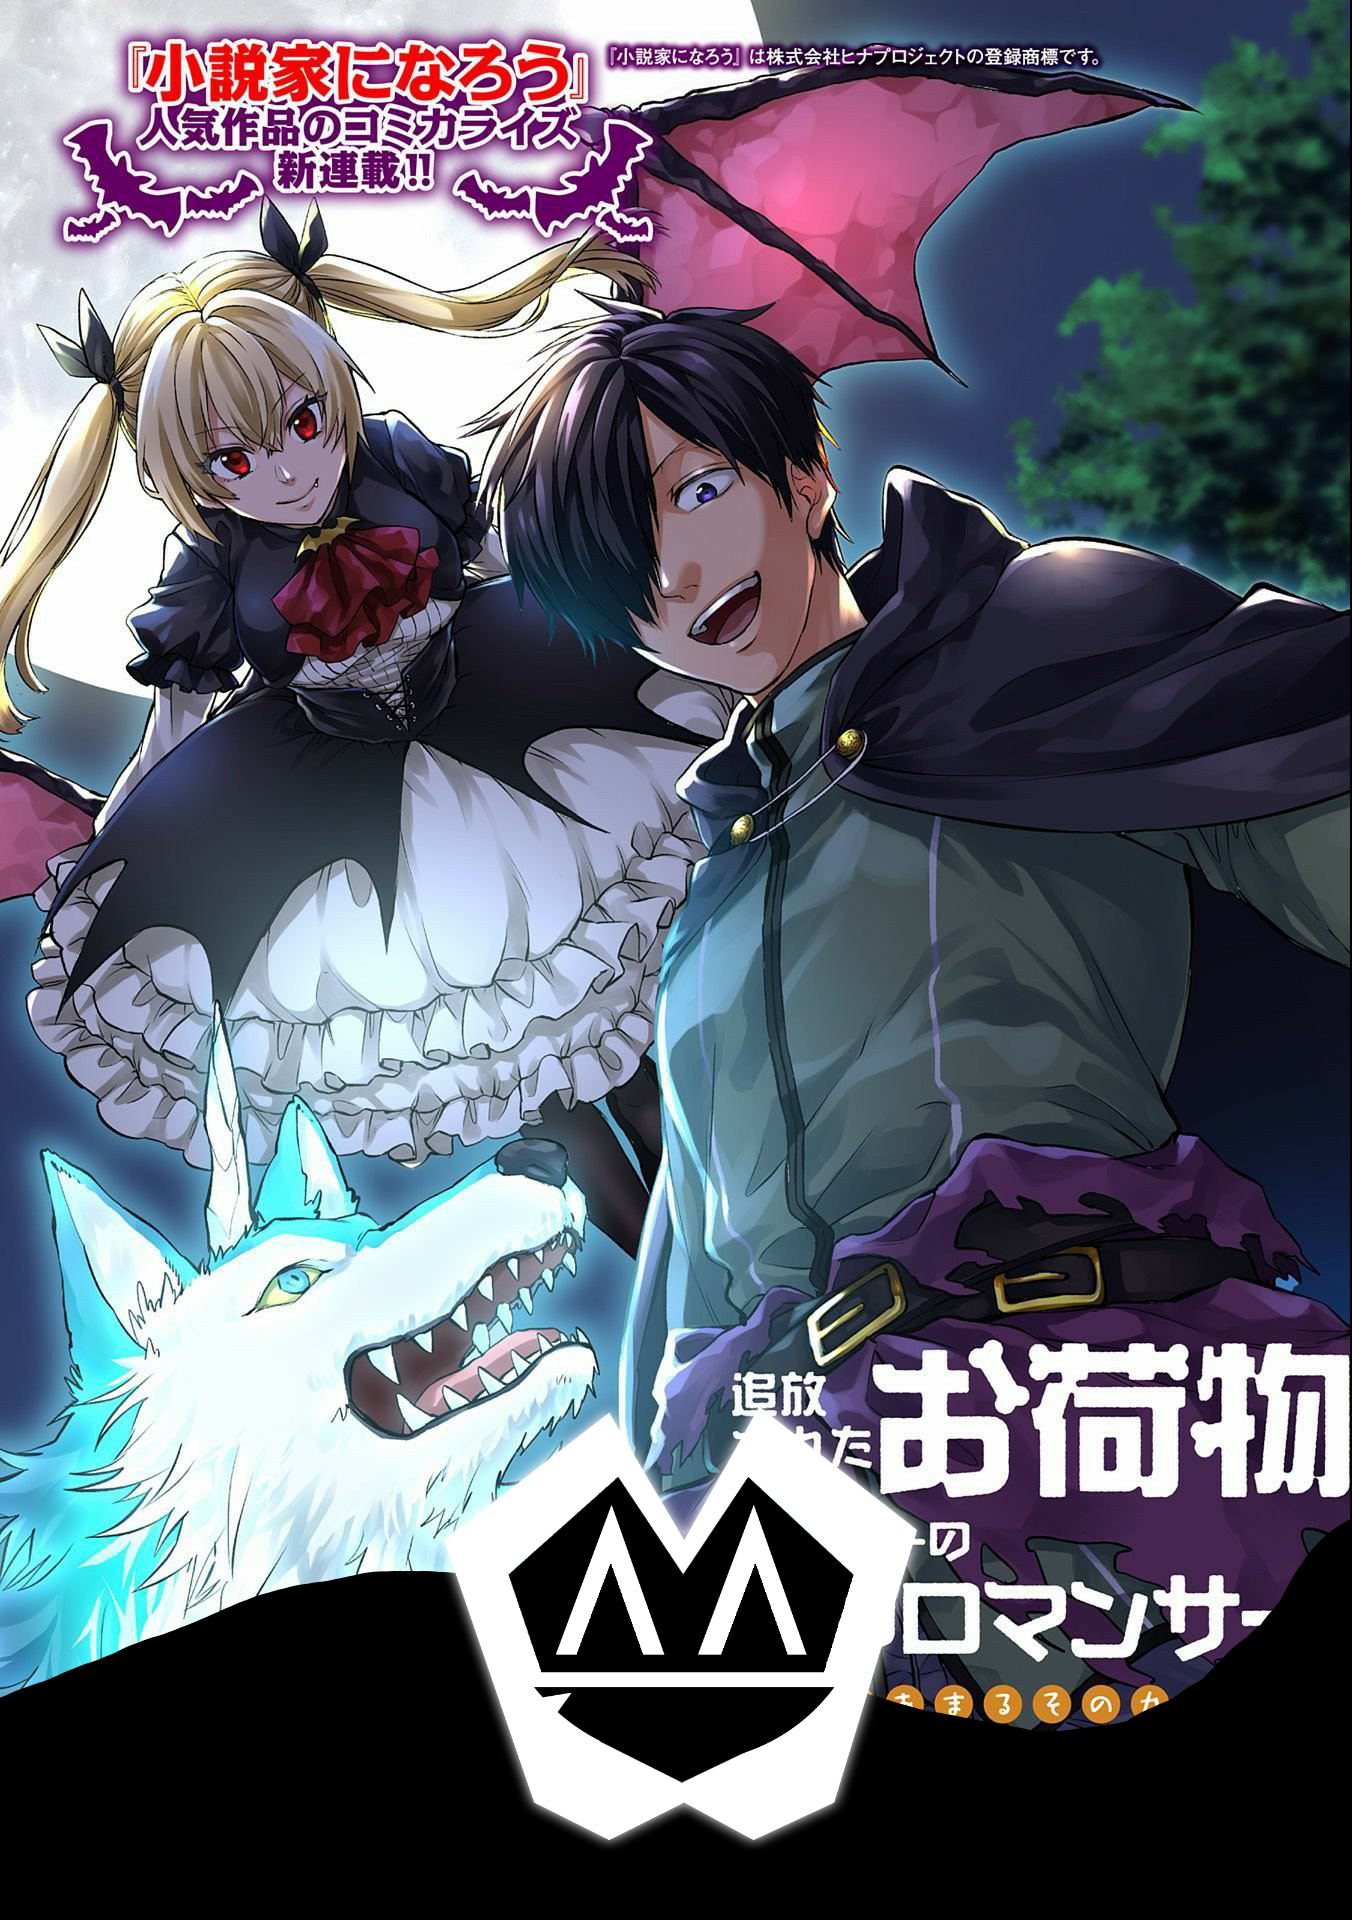 Yuusha Party o Tsuihou Sareta Beast Tamer, Saikyou Shuzoku Nekomimi Shoujo  to Deau Manga Chapter List - MangaFreak